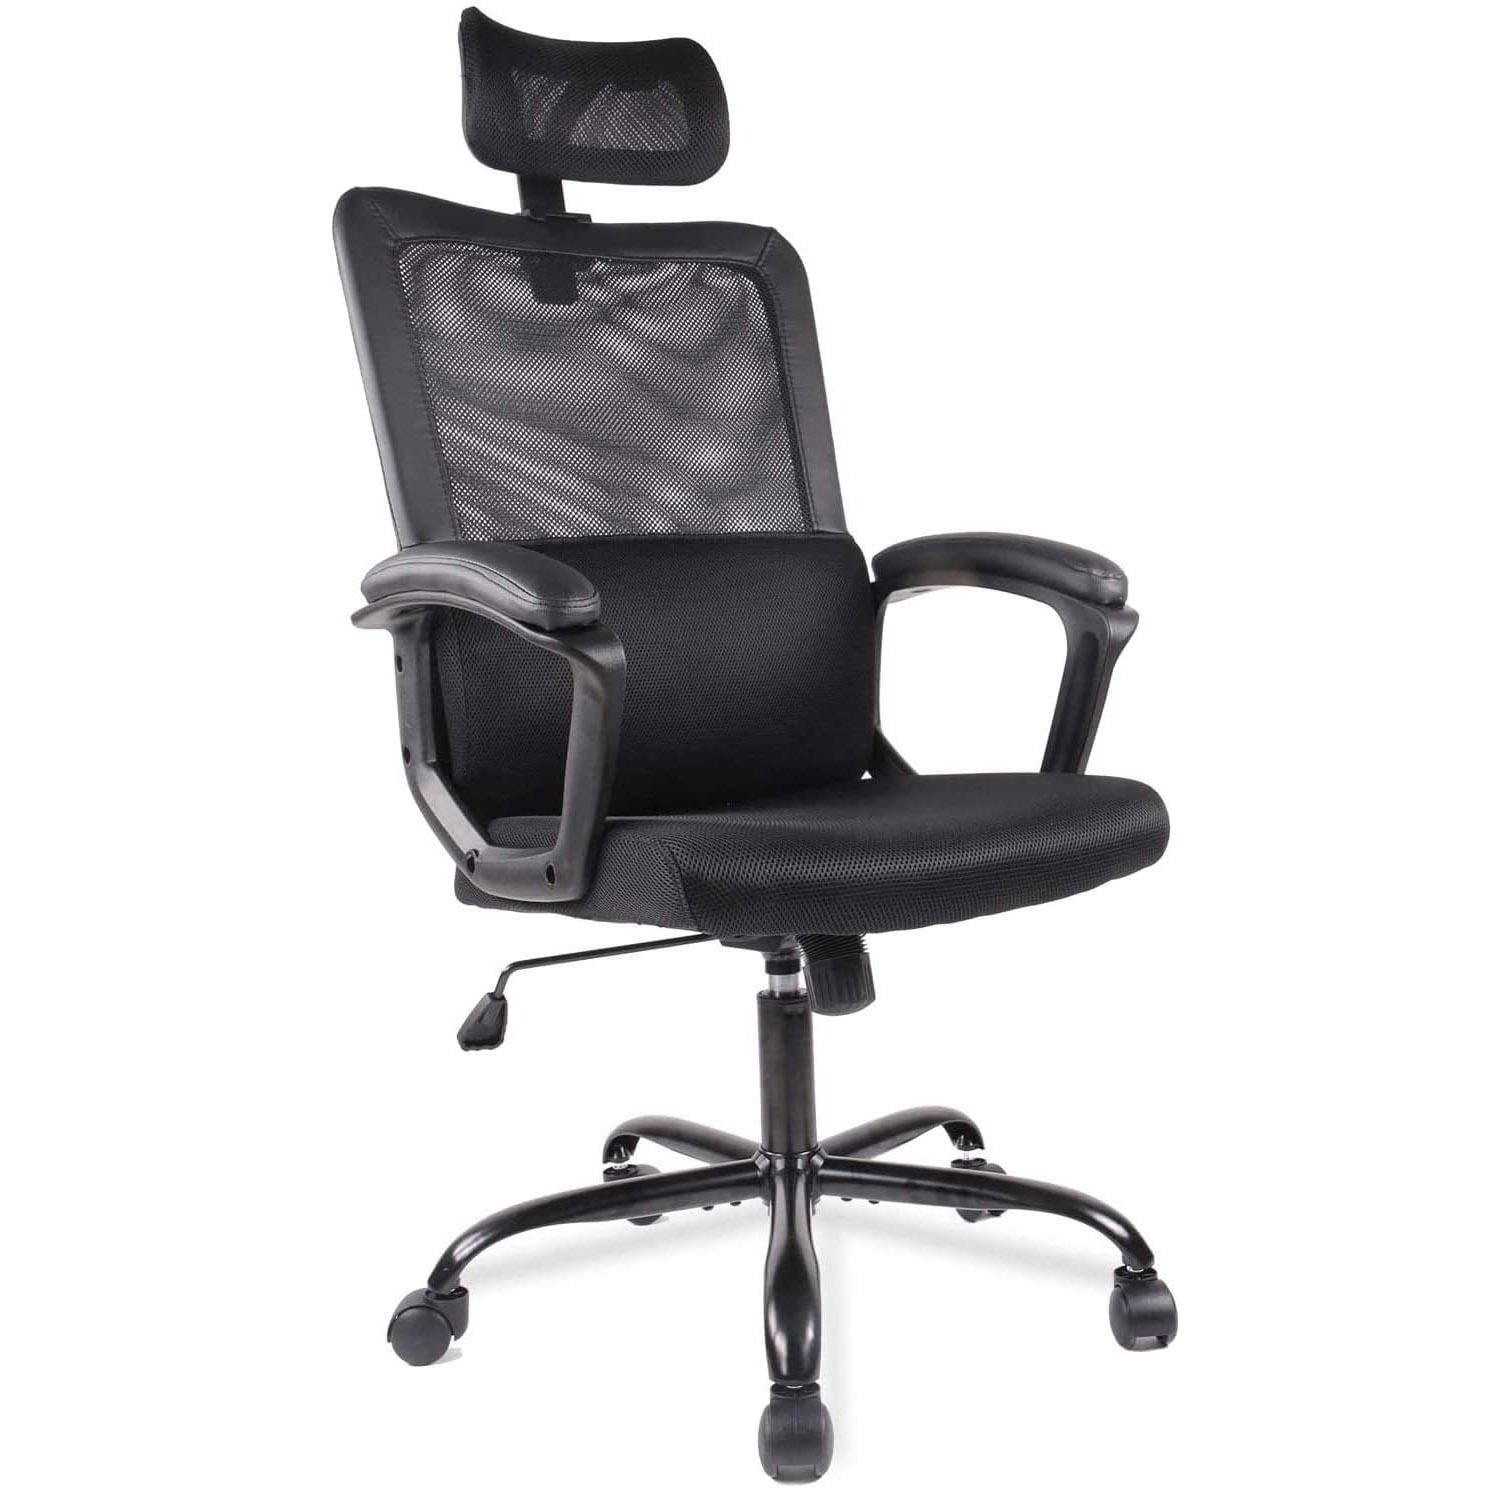 SMUG Ergonomic Mesh Home Office Computer Chair for $49.40 Shipped